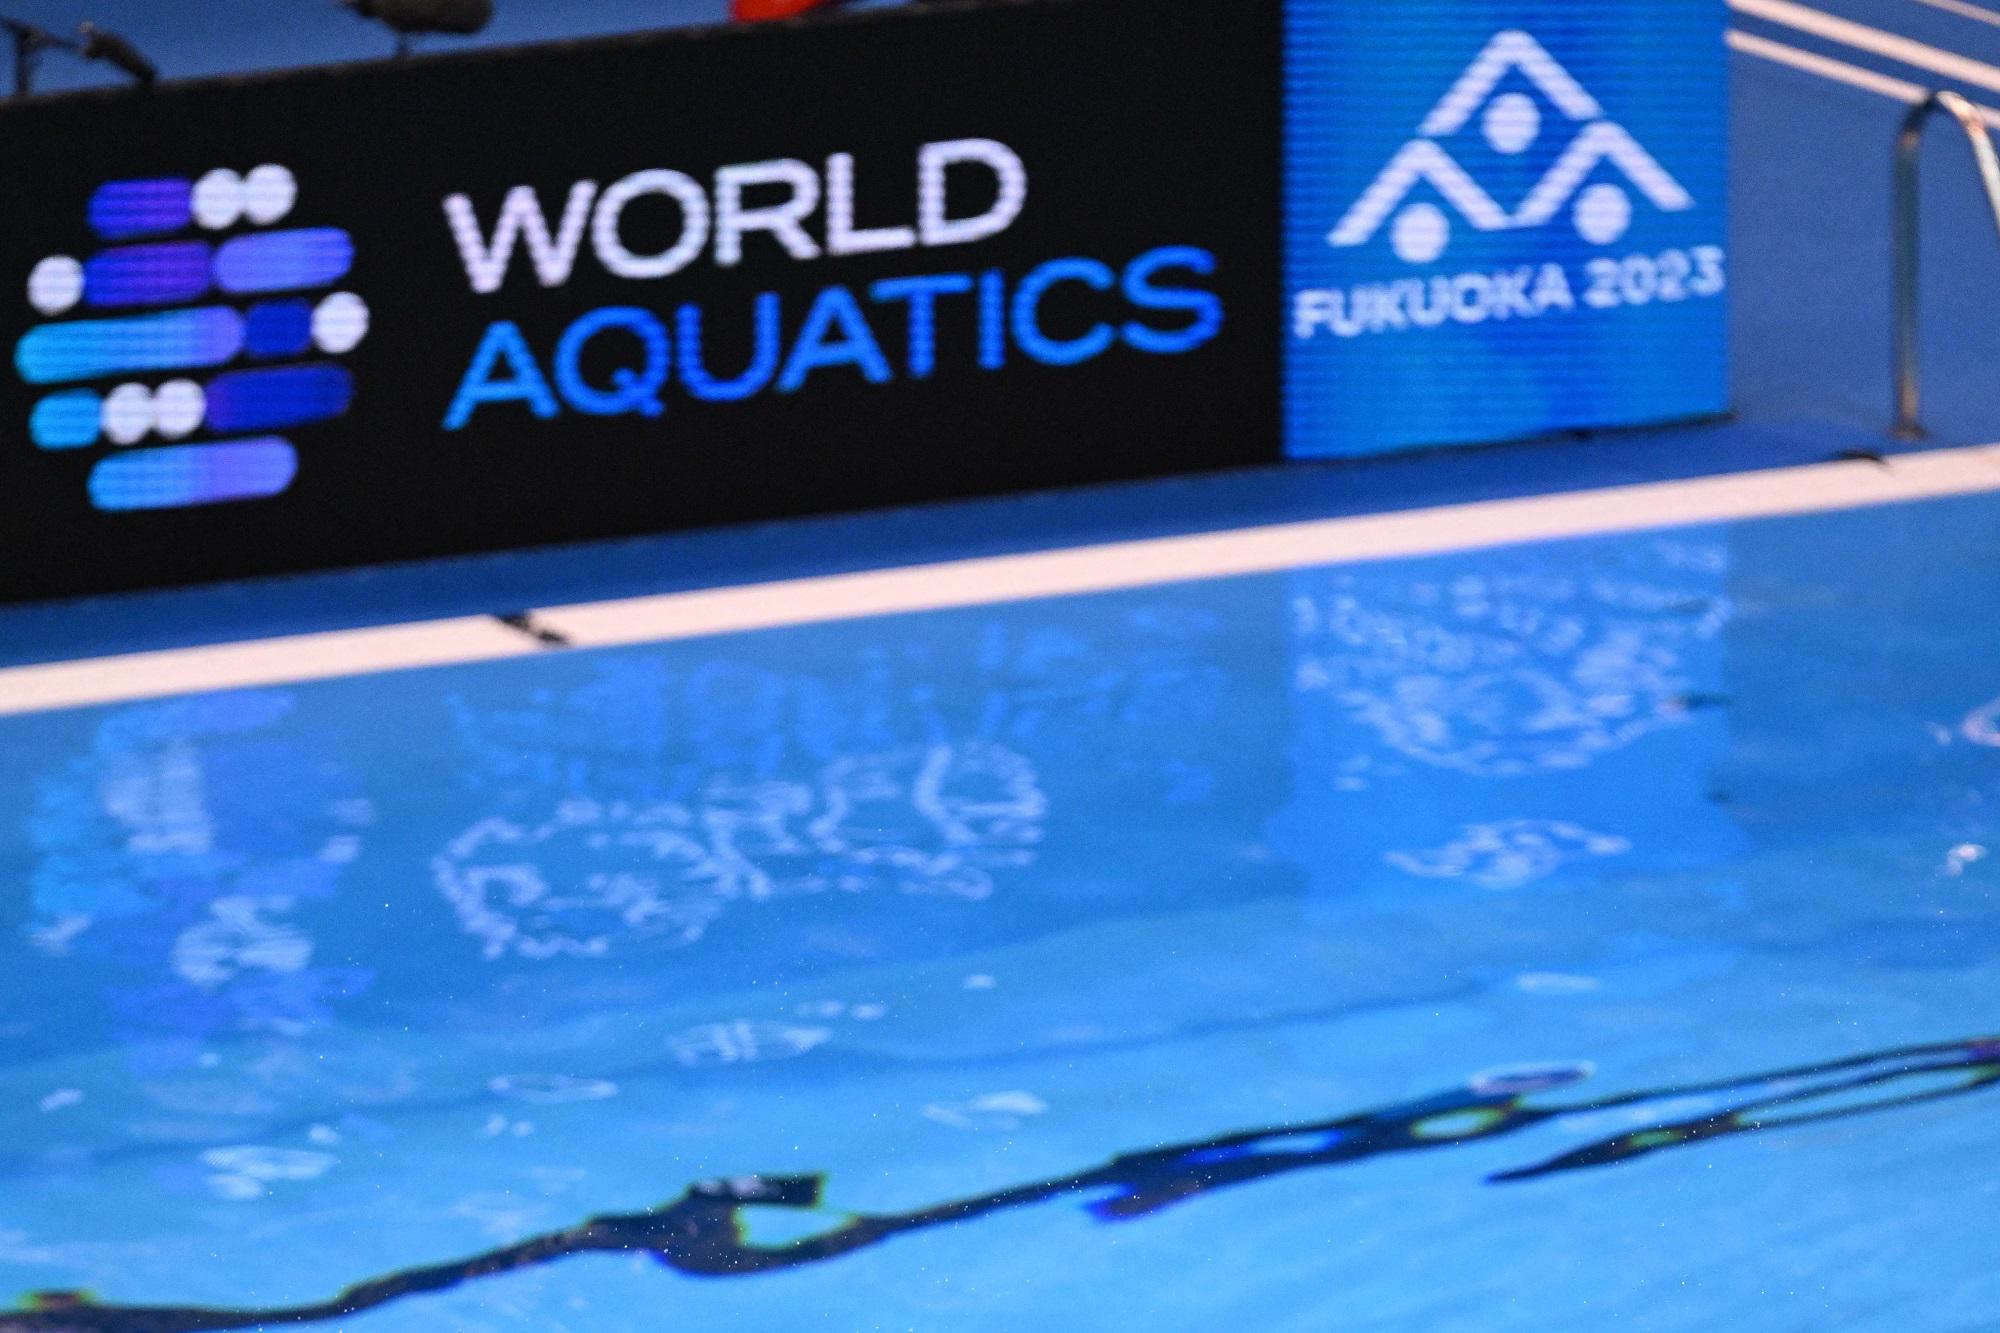 Fukuoka 2023 World Swimming Championships, Italians competing today 23